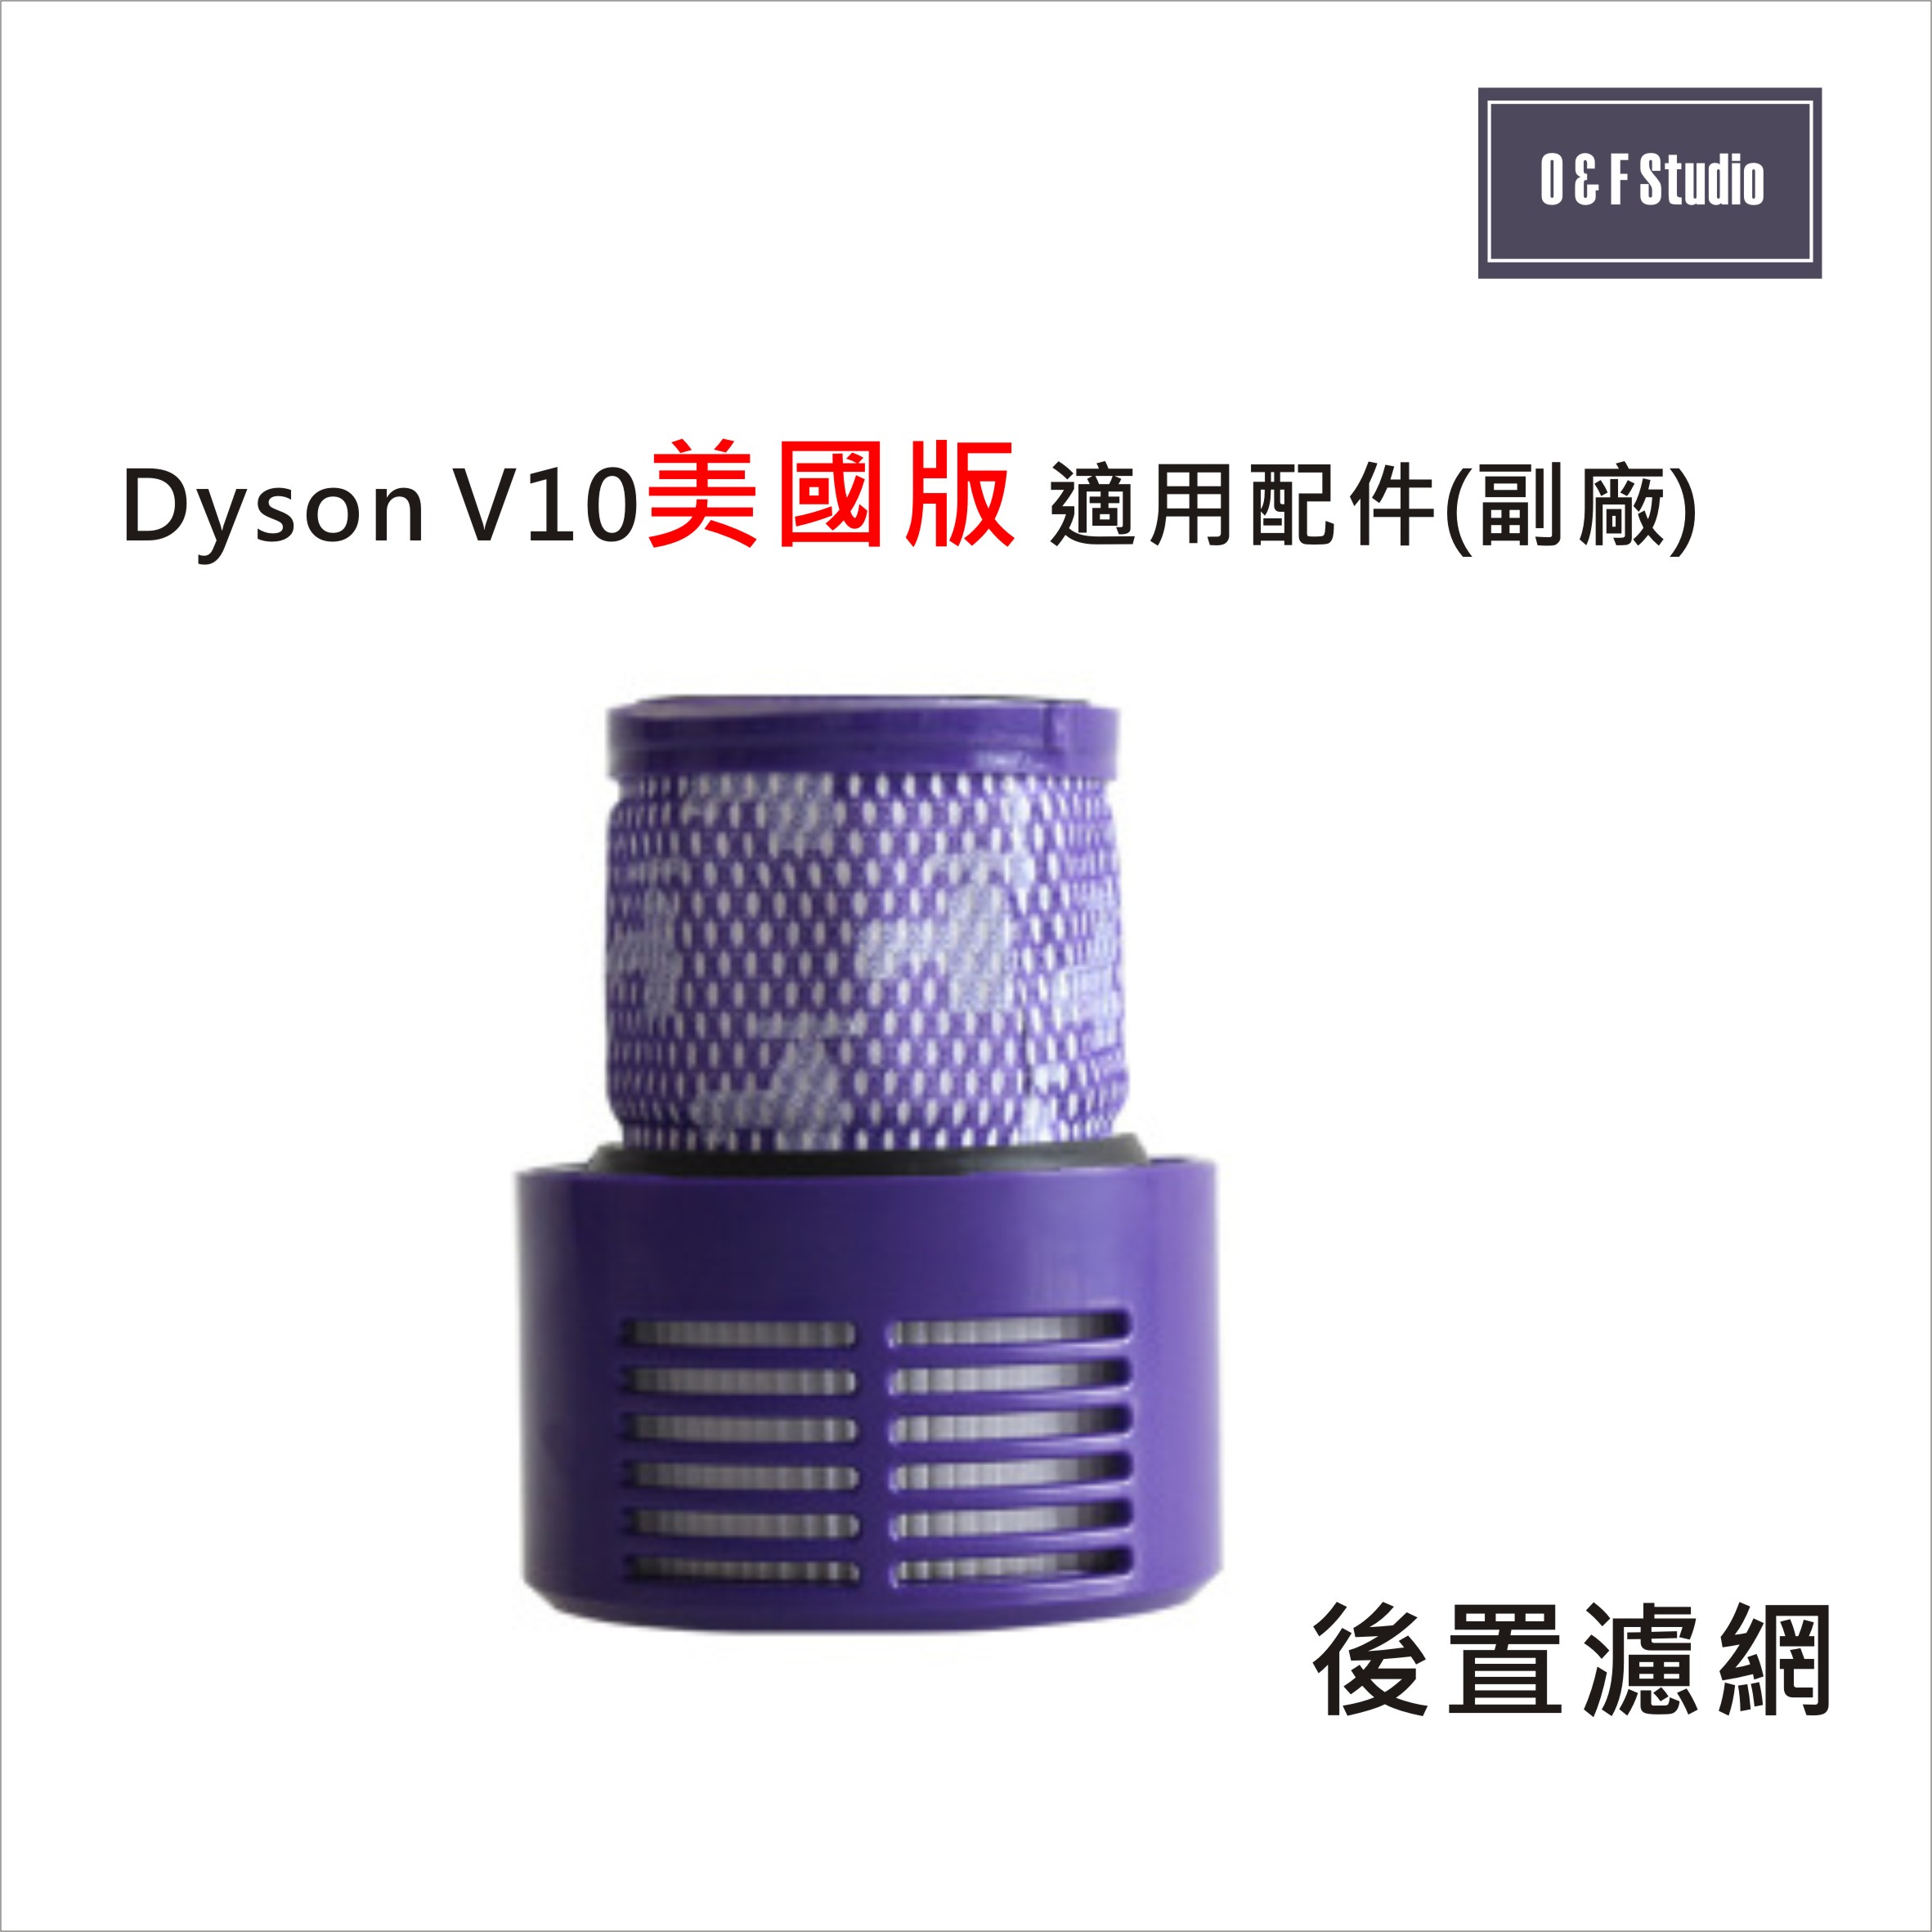 Dyson 戴森 V10 (長款)美國版手持式吸塵器適用後置濾網(副廠) HEPA濾心 後置濾蓋【居家達人DS007】